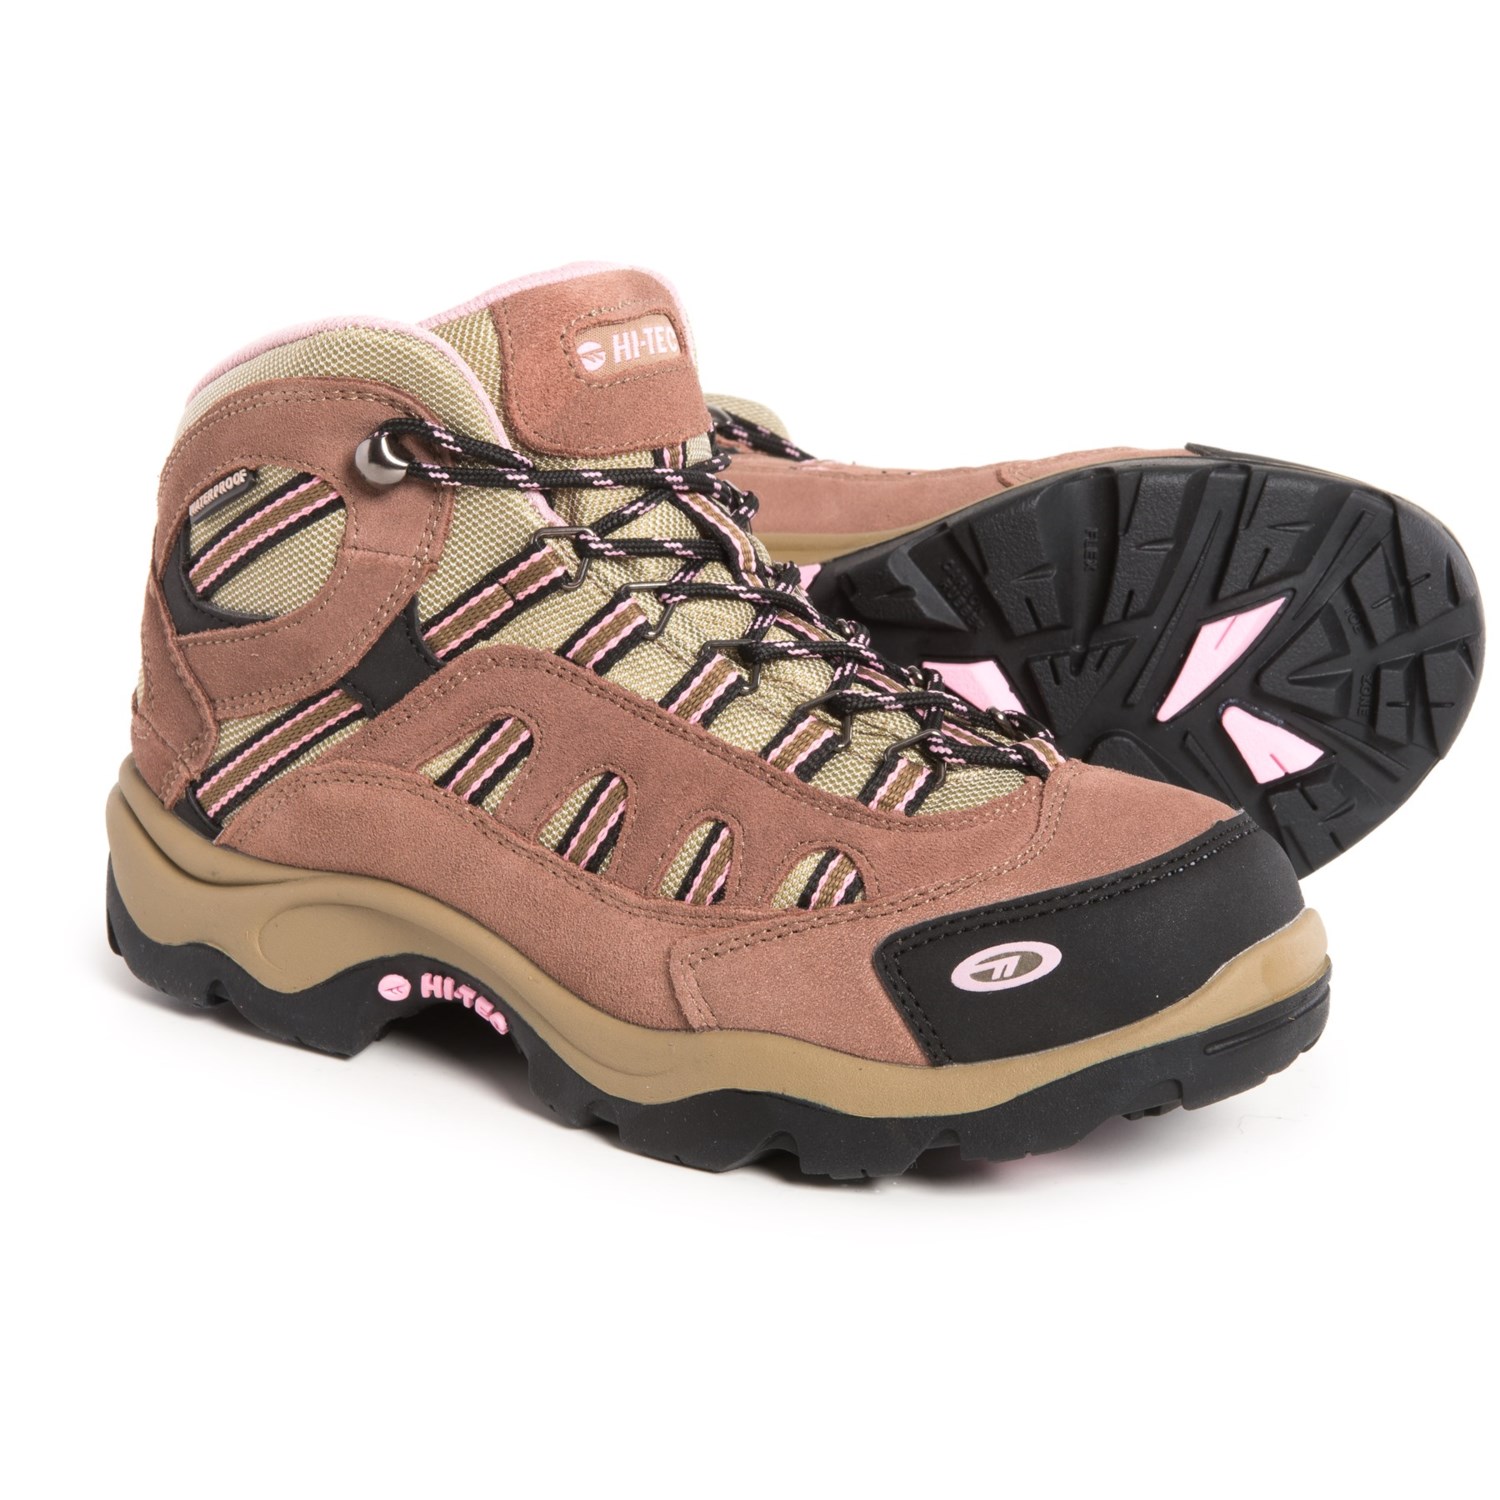 Hi-Tec Bandera Mid Hiking Boots – Waterproof (For Women)